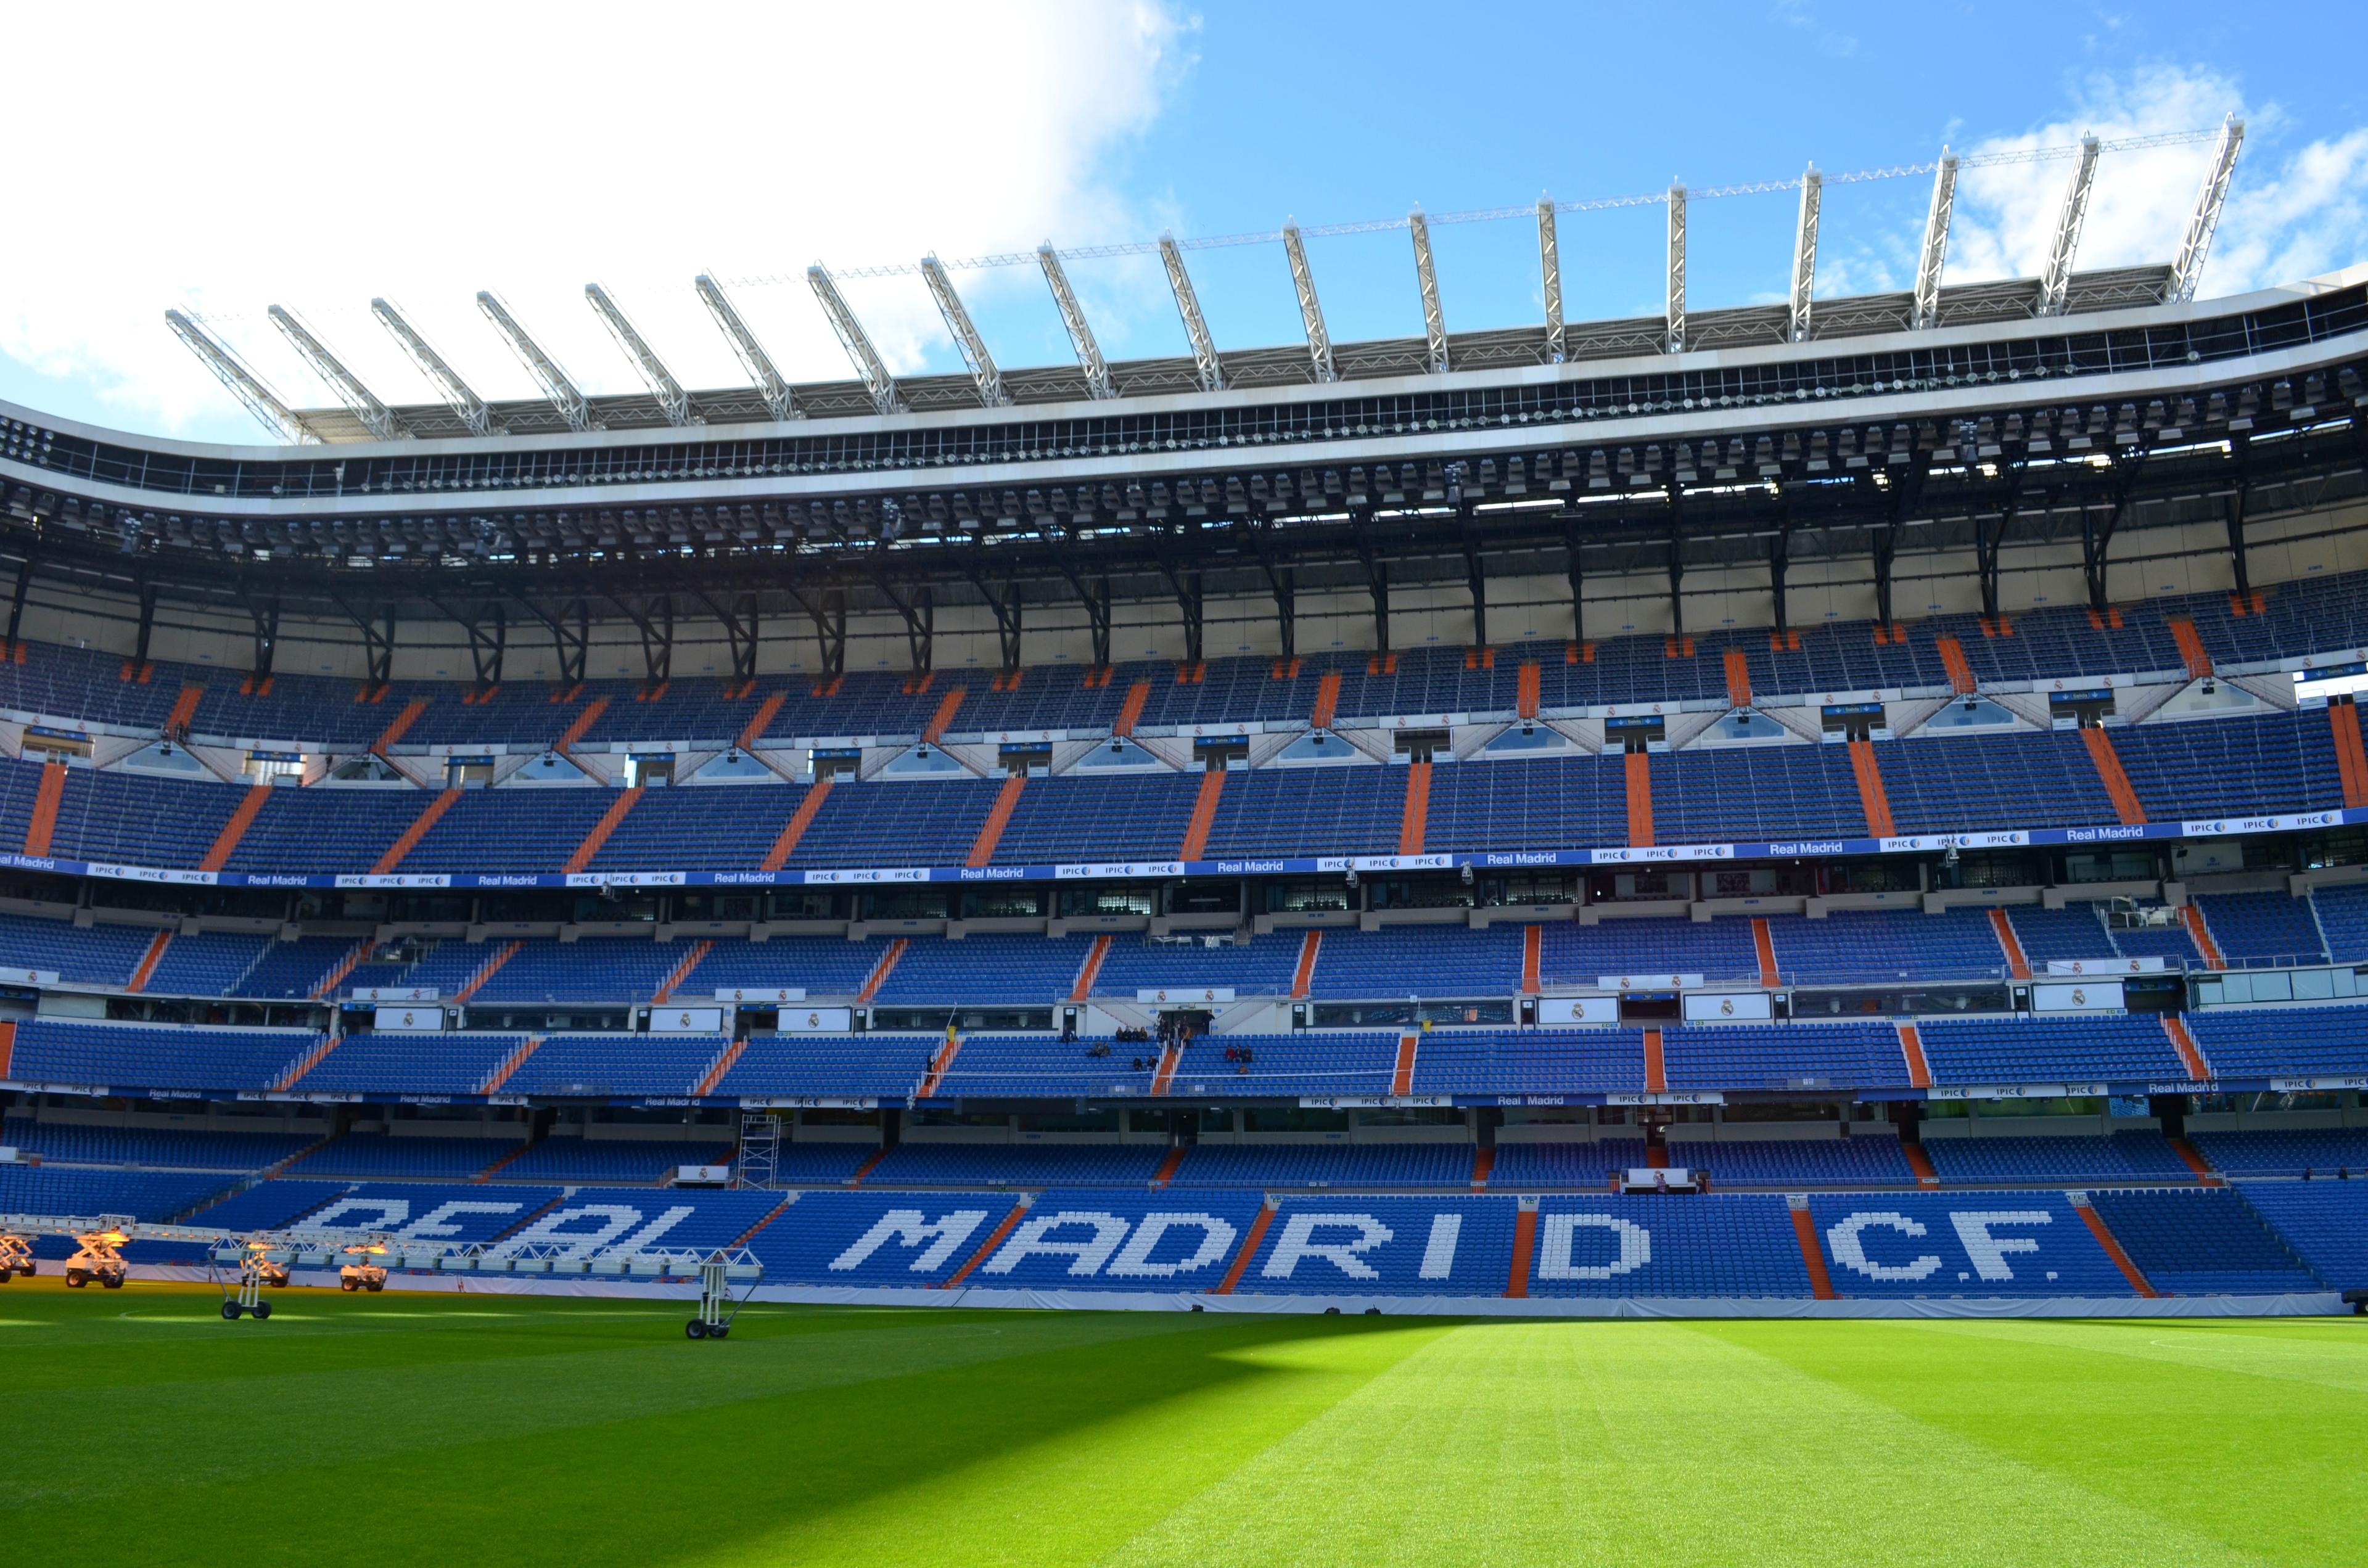 Cover image of this place Tour Bernabéu